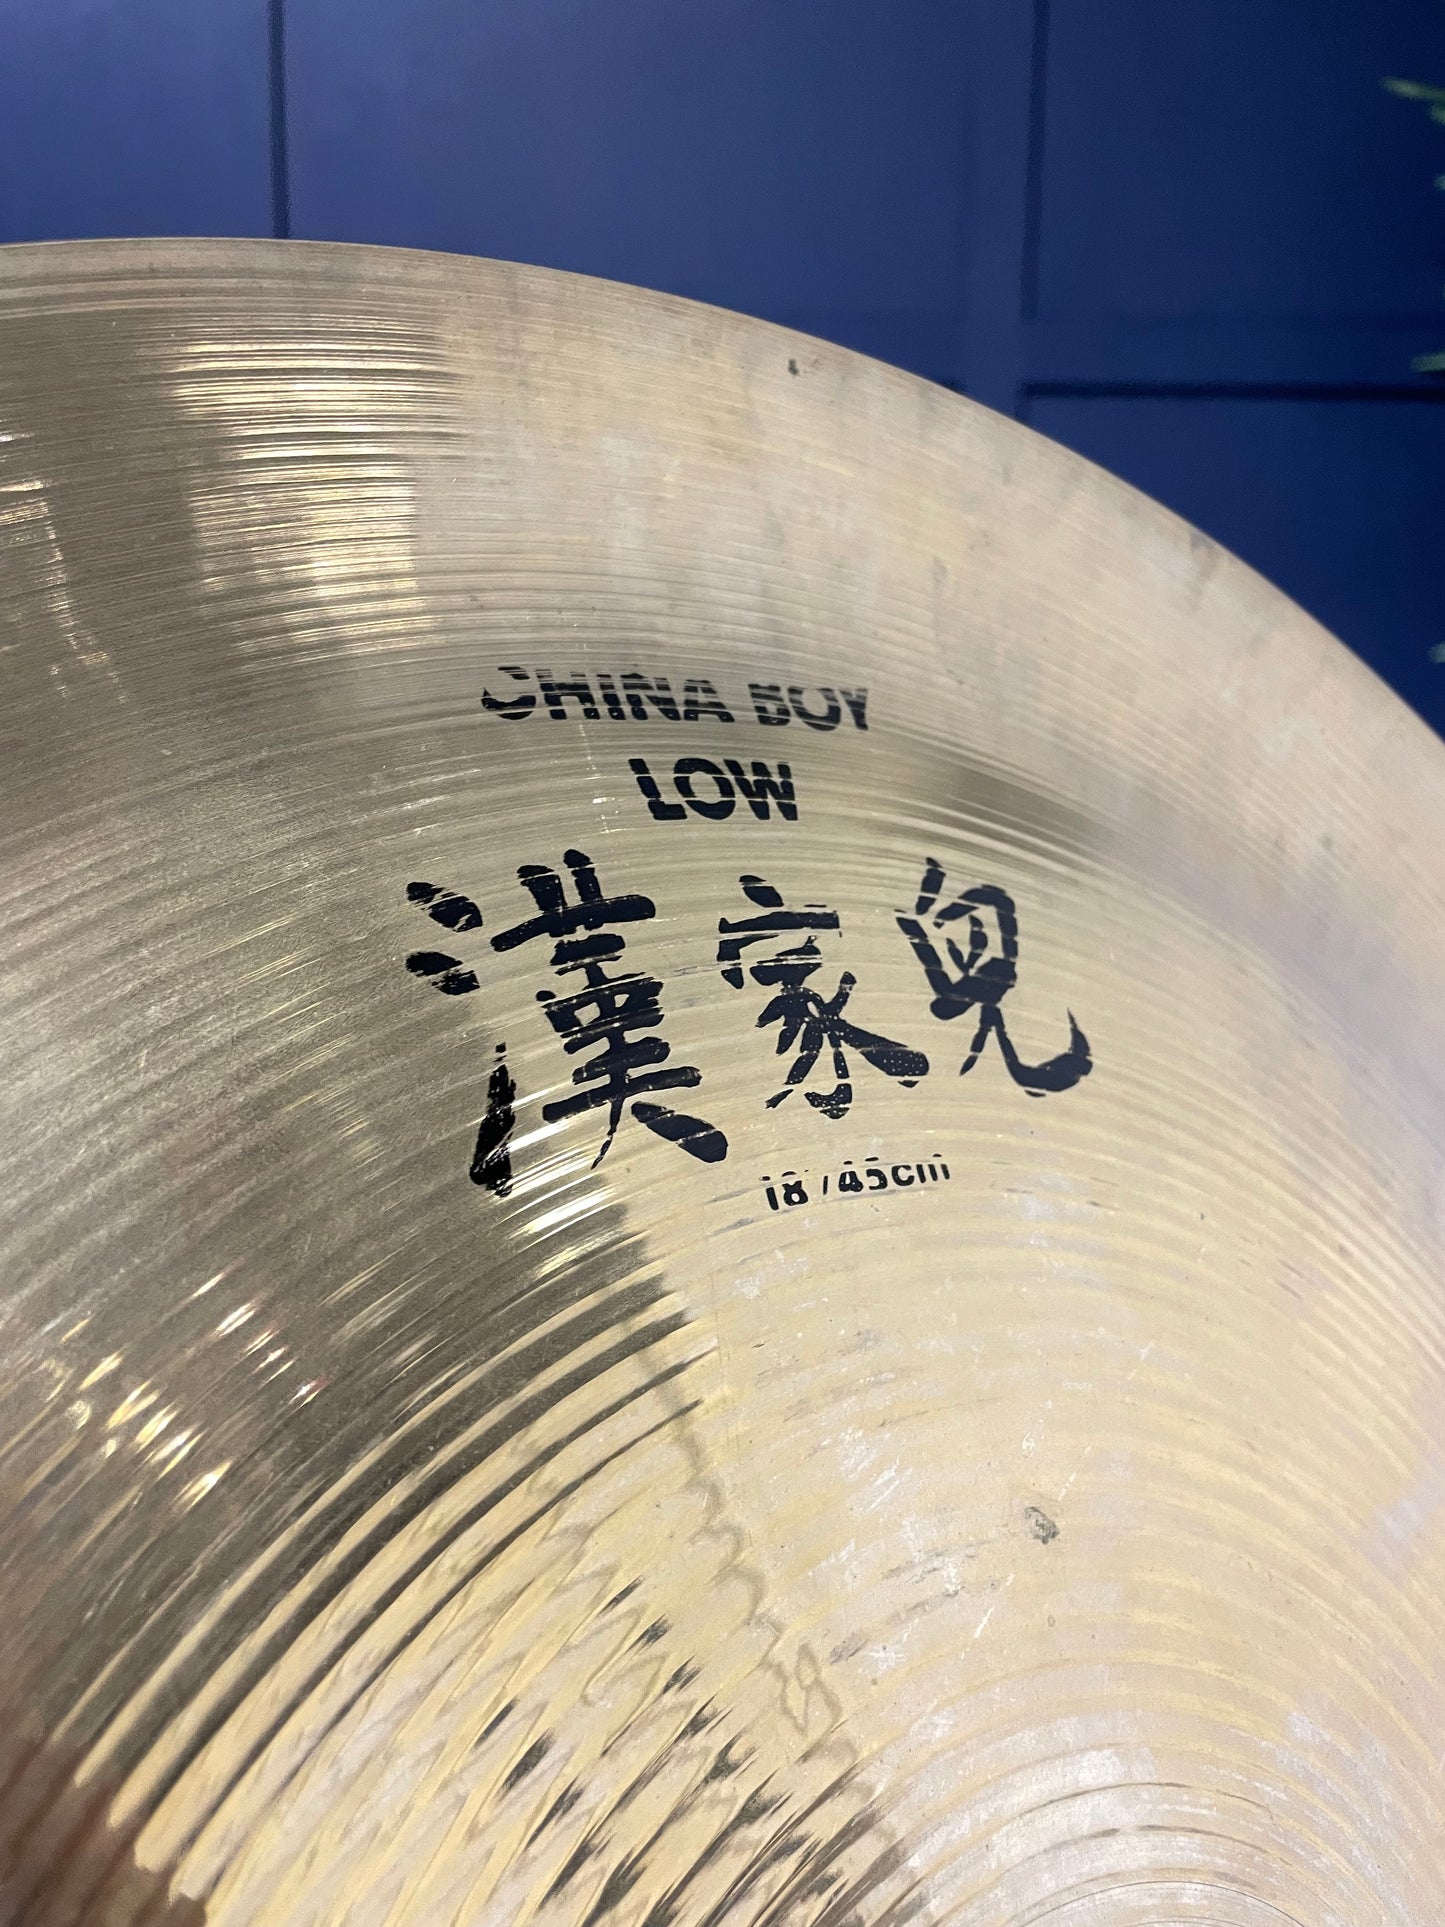 Zildjian China Low Boy 18”/45cm China Cymbal / Drum Accessory #JZ19